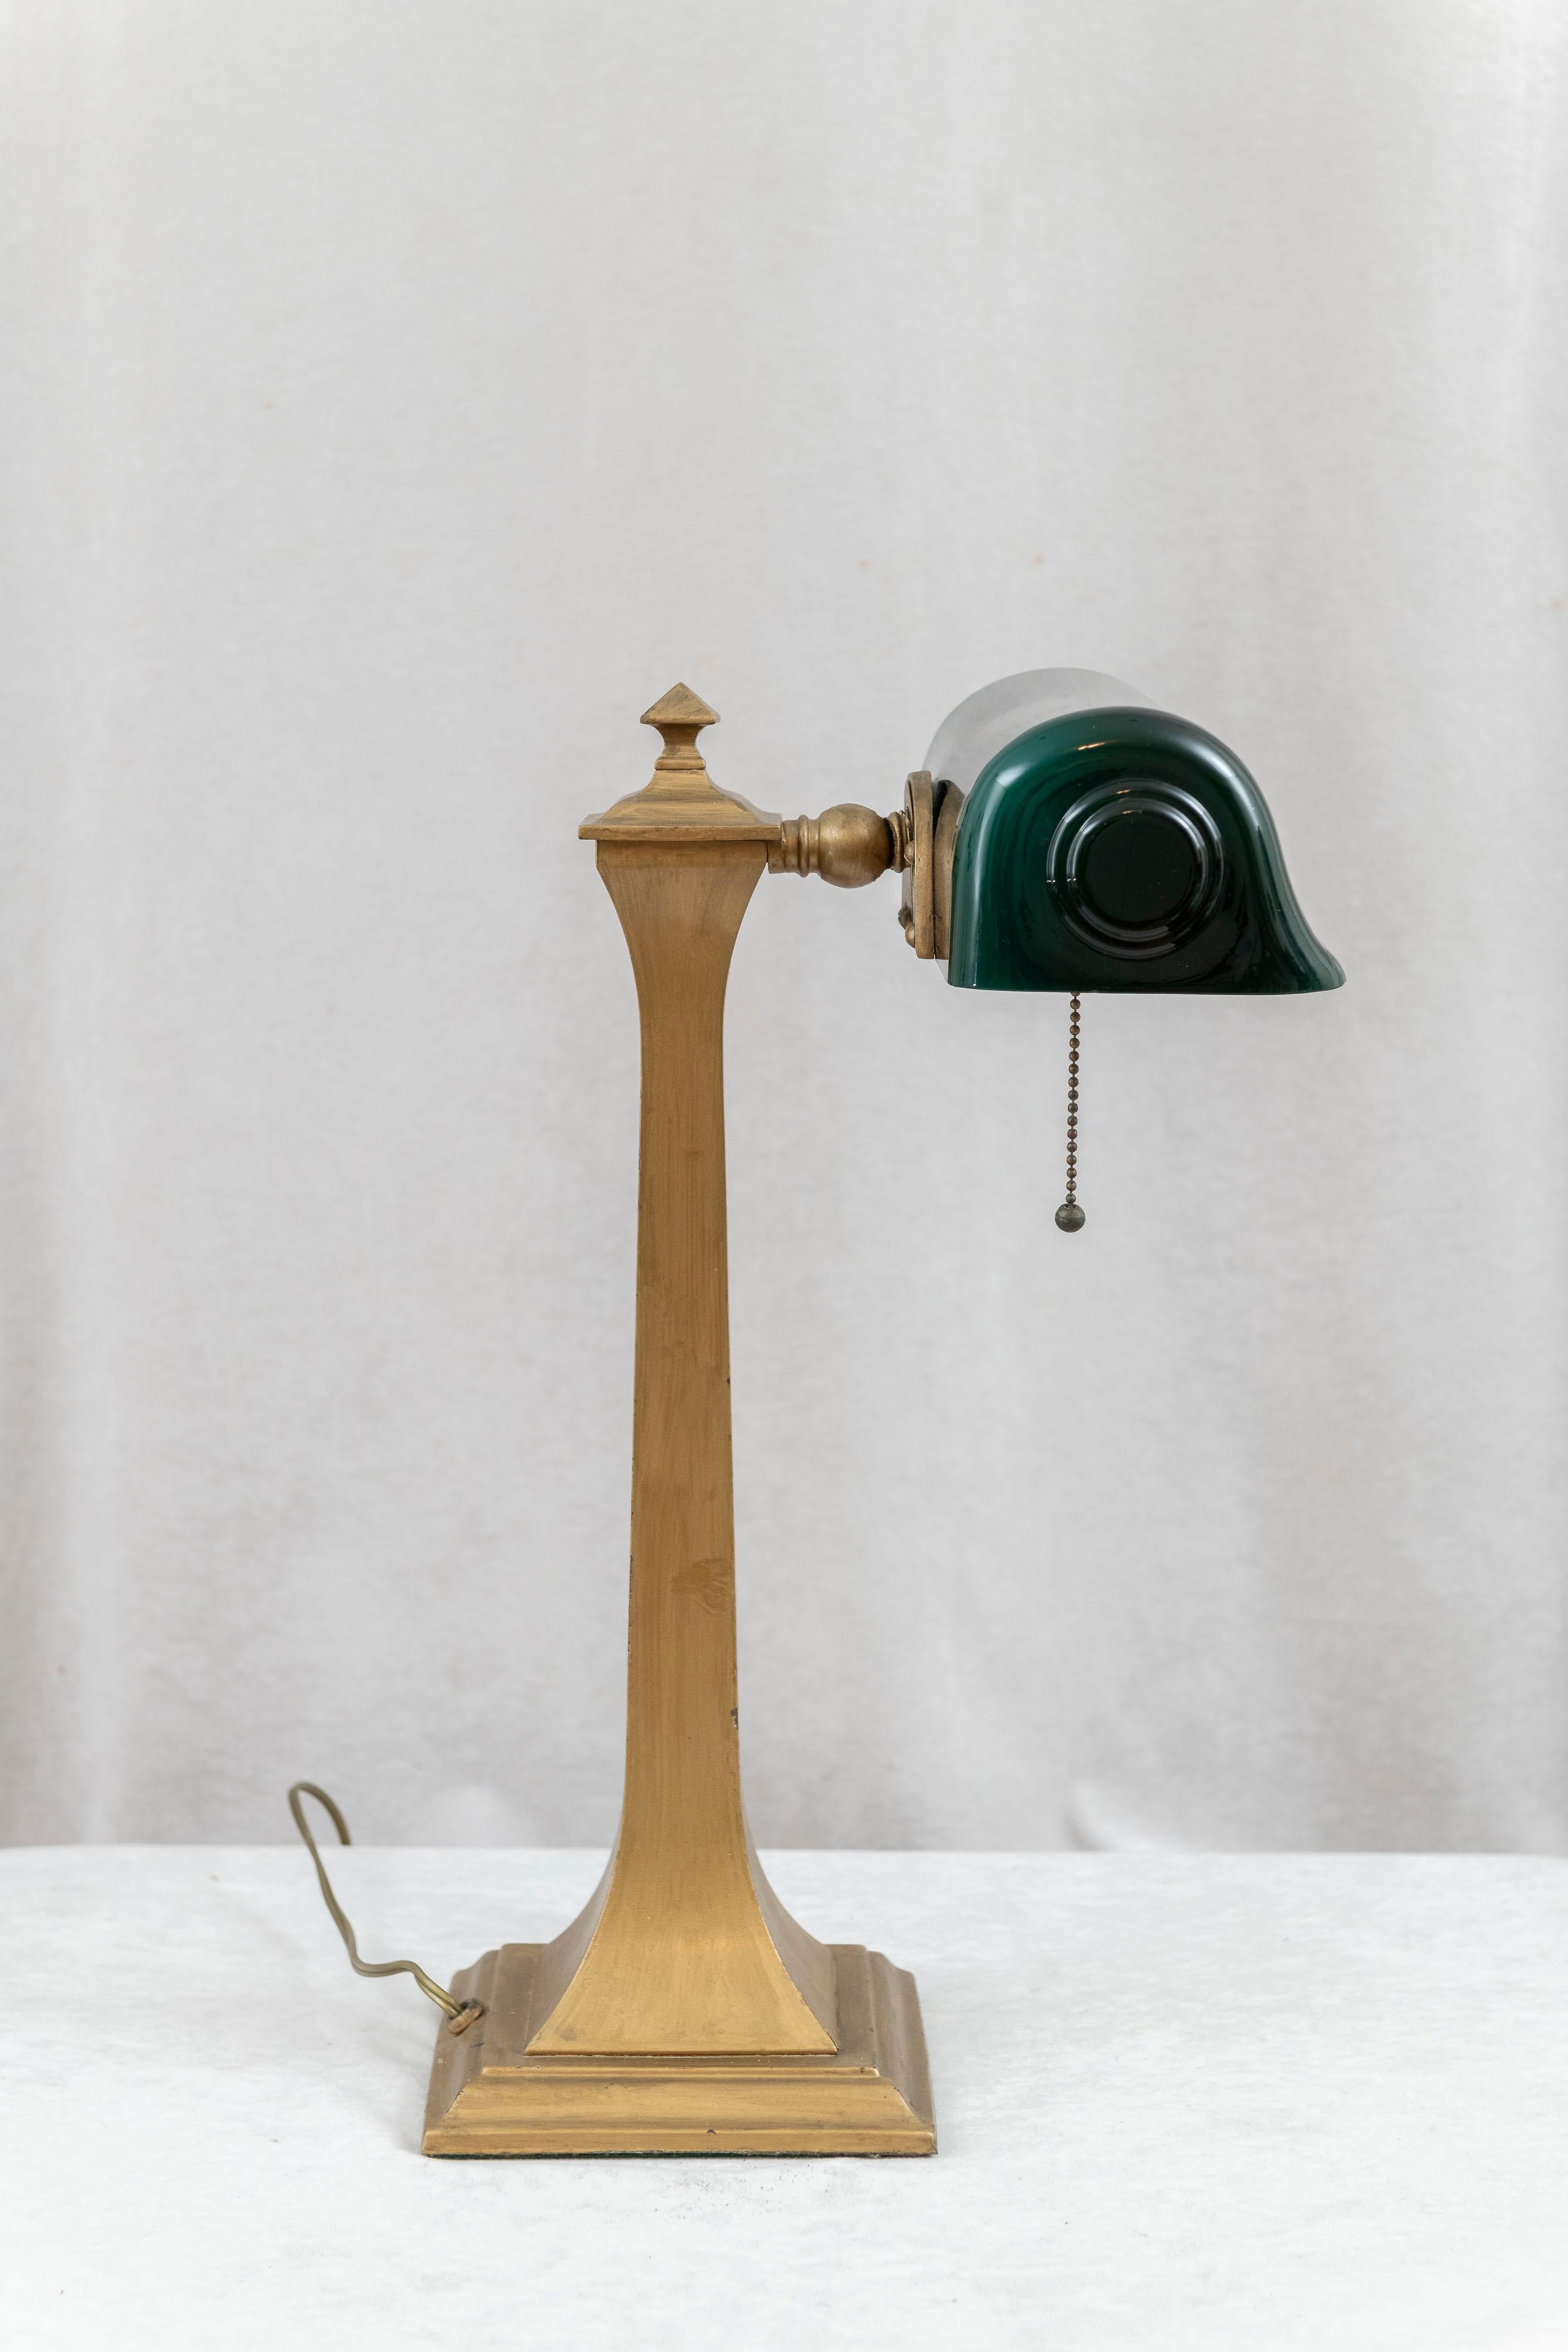 Arts and Crafts Antique Banker's Desk Lamp by Verdelite, Original Green Shade, ca. 1917